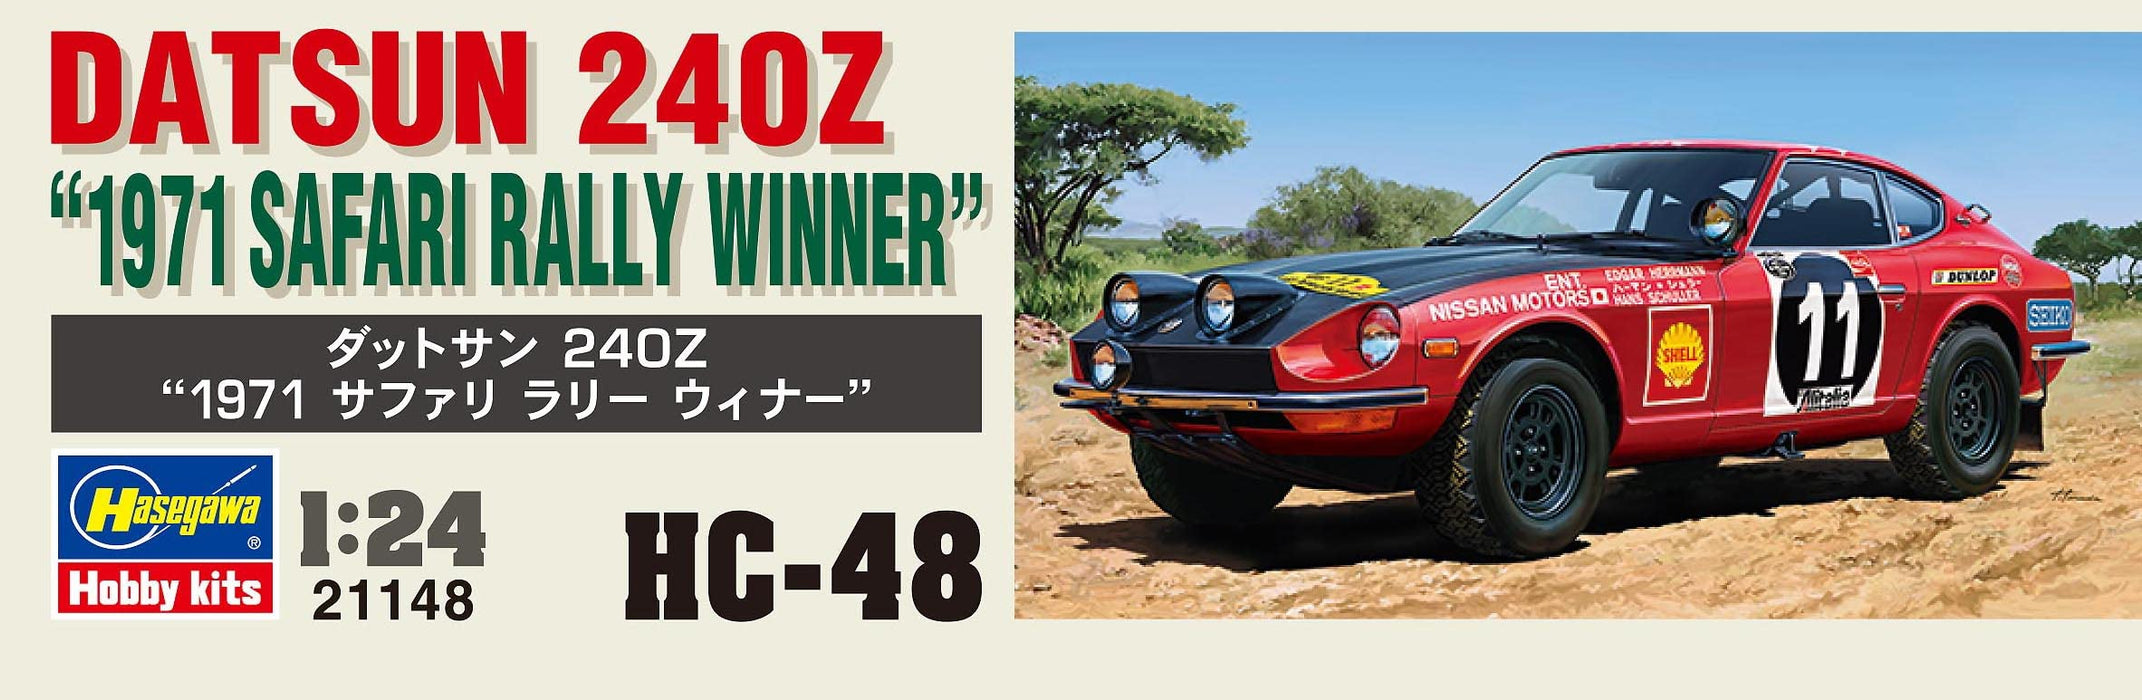 HASEGAWA 1/24 Datsun Fairlady 240Z 1971 Safari Rally Winner Modèle en plastique